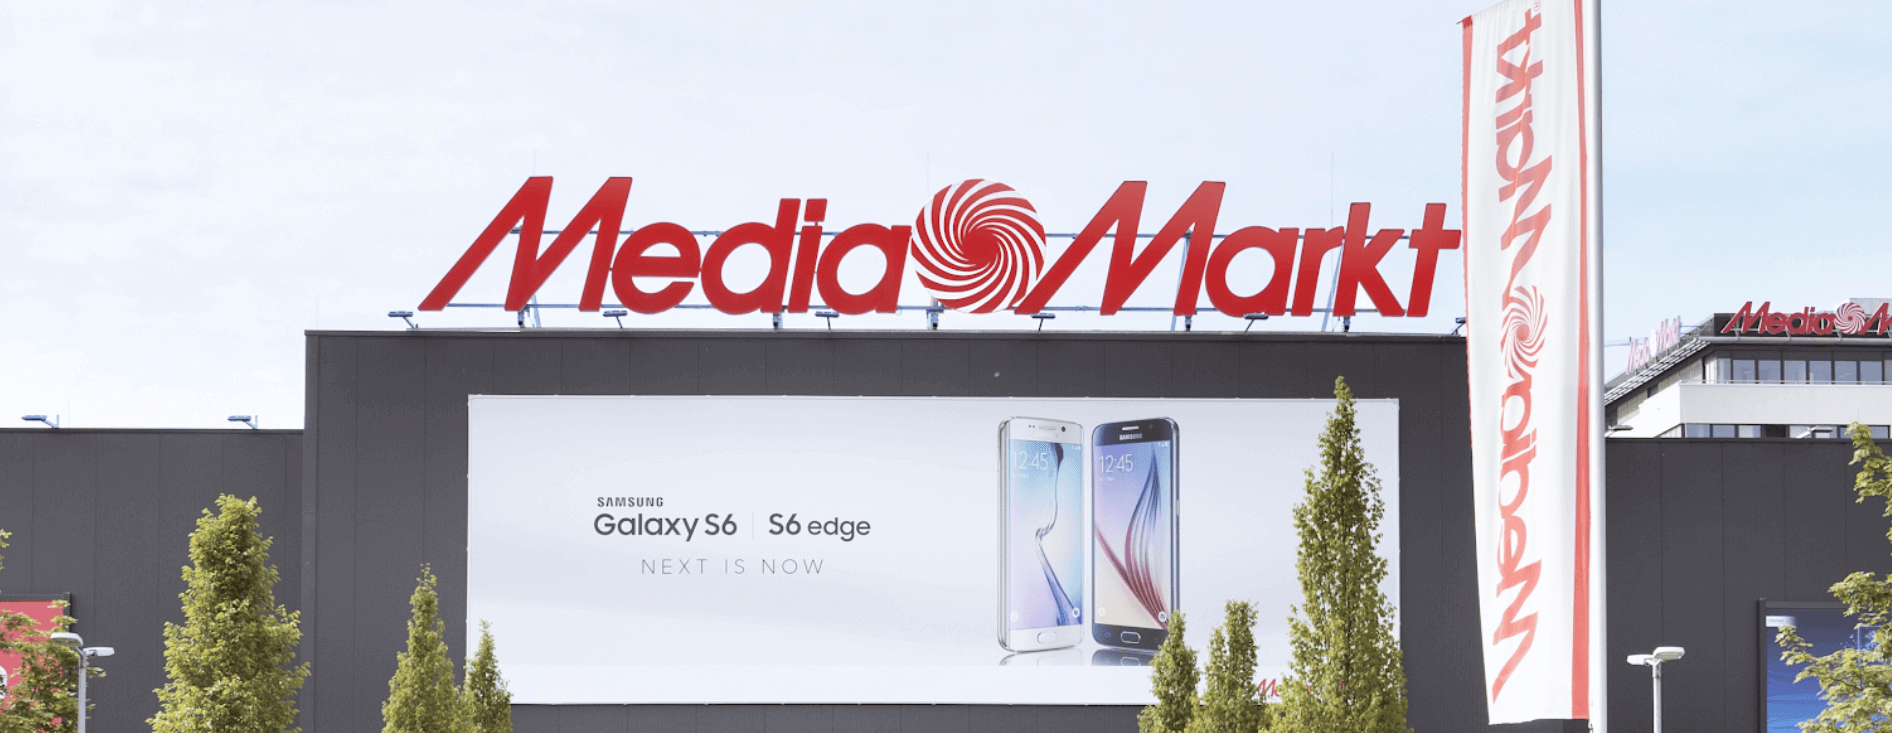 MediaMarkt Portugal store